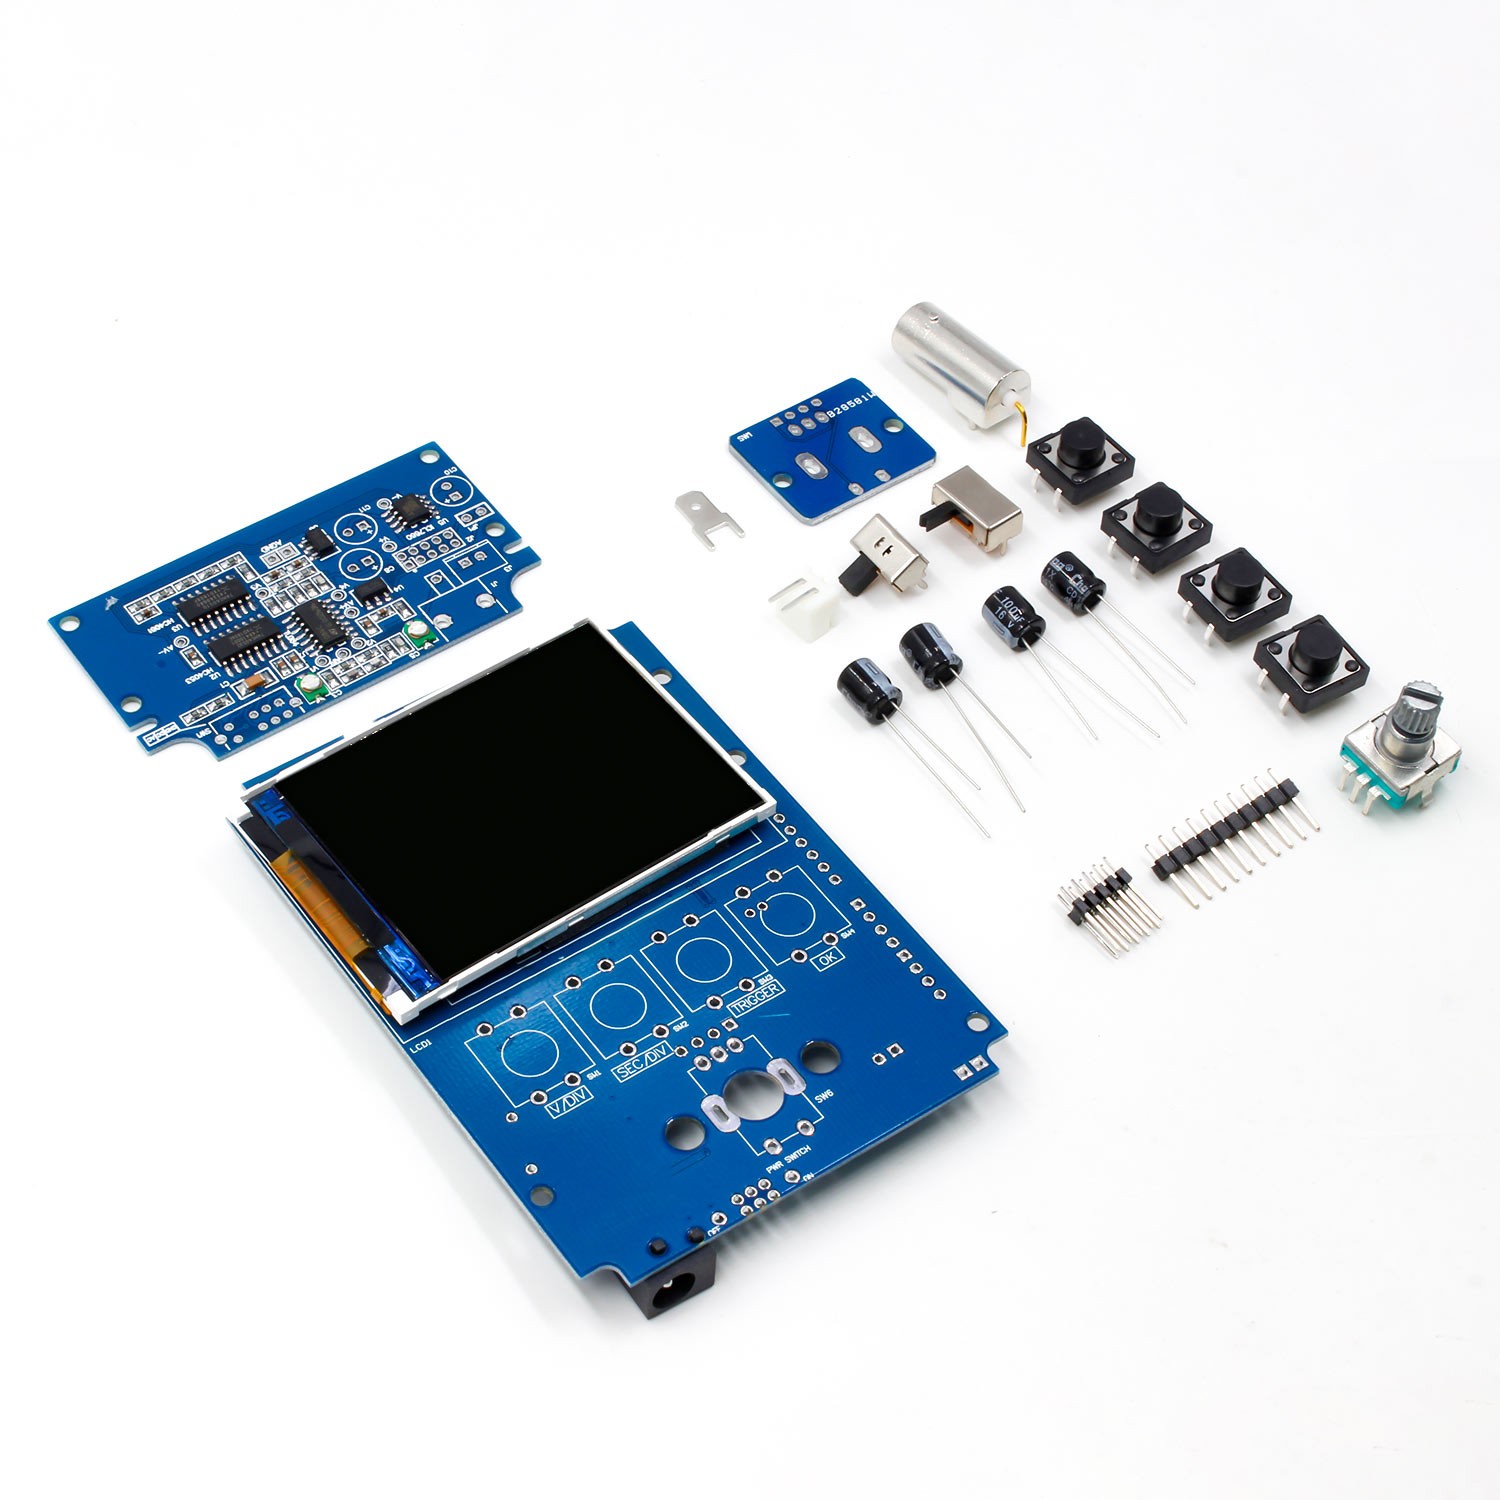 DSO FNIRSI-150 Digital Portable Pocket Oscilloscope Kit 1MSa/s 200KHz Analog Bandwidth Support 80KHz PWM and Firmware Update